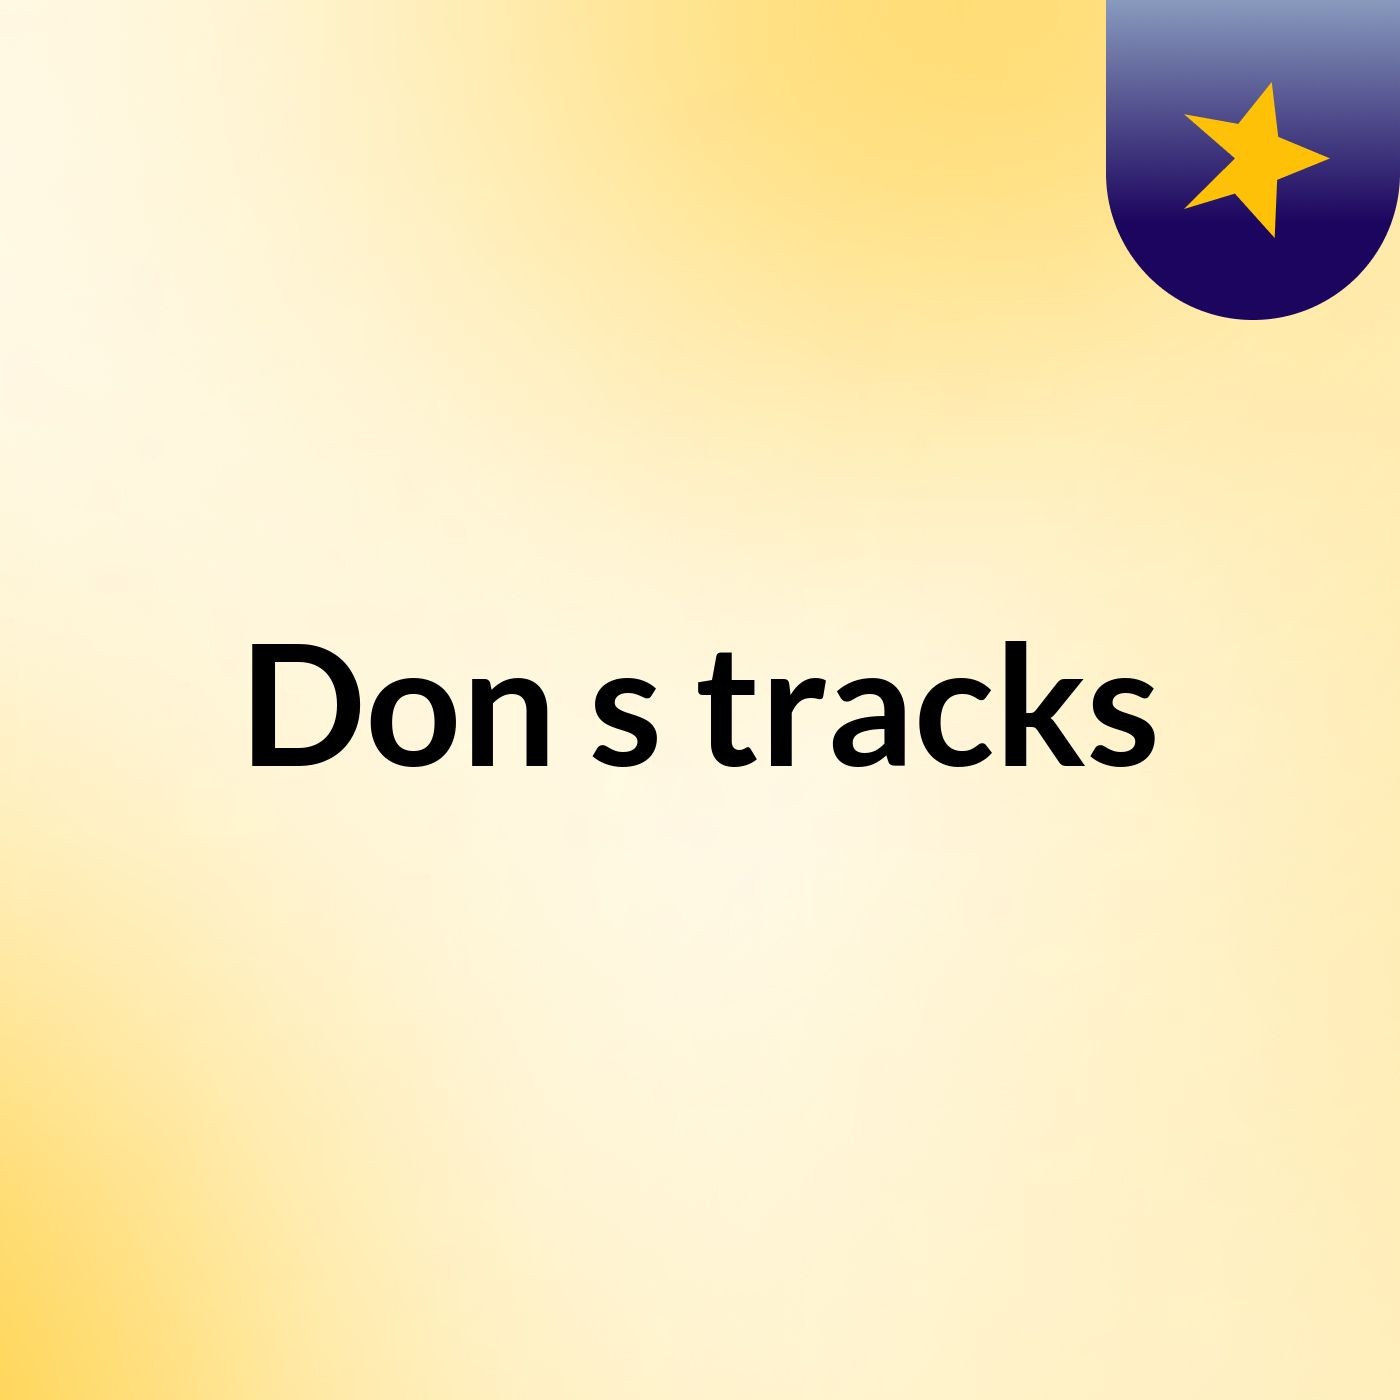 Don's tracks